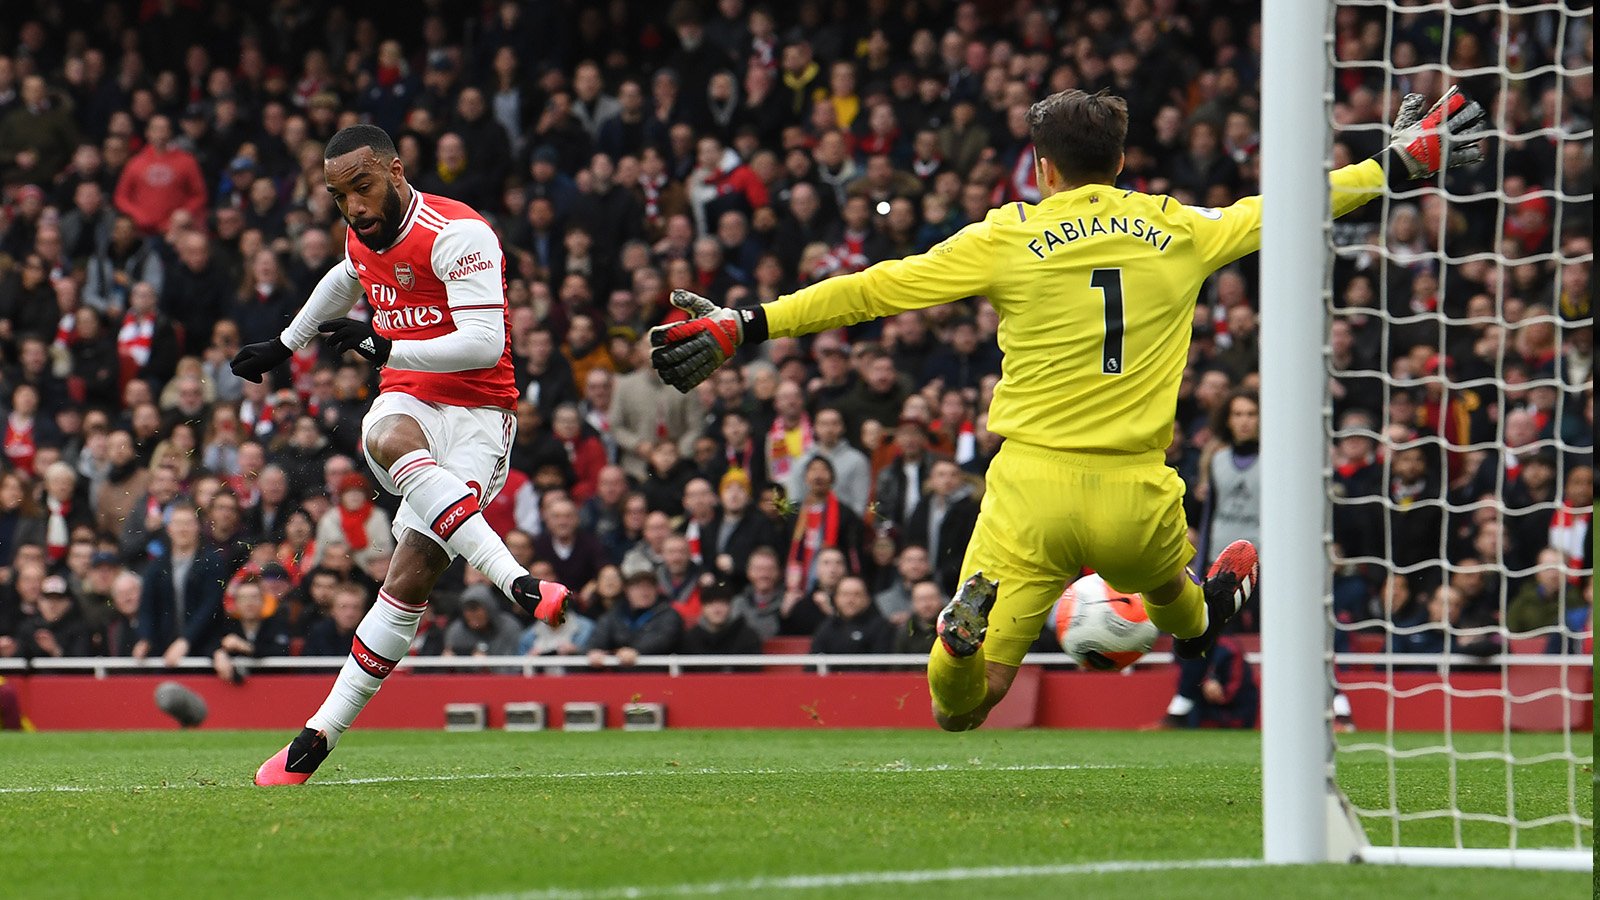 Highlights: Lacazette scores in Arsenal win | Goals | News | Arsenal.com